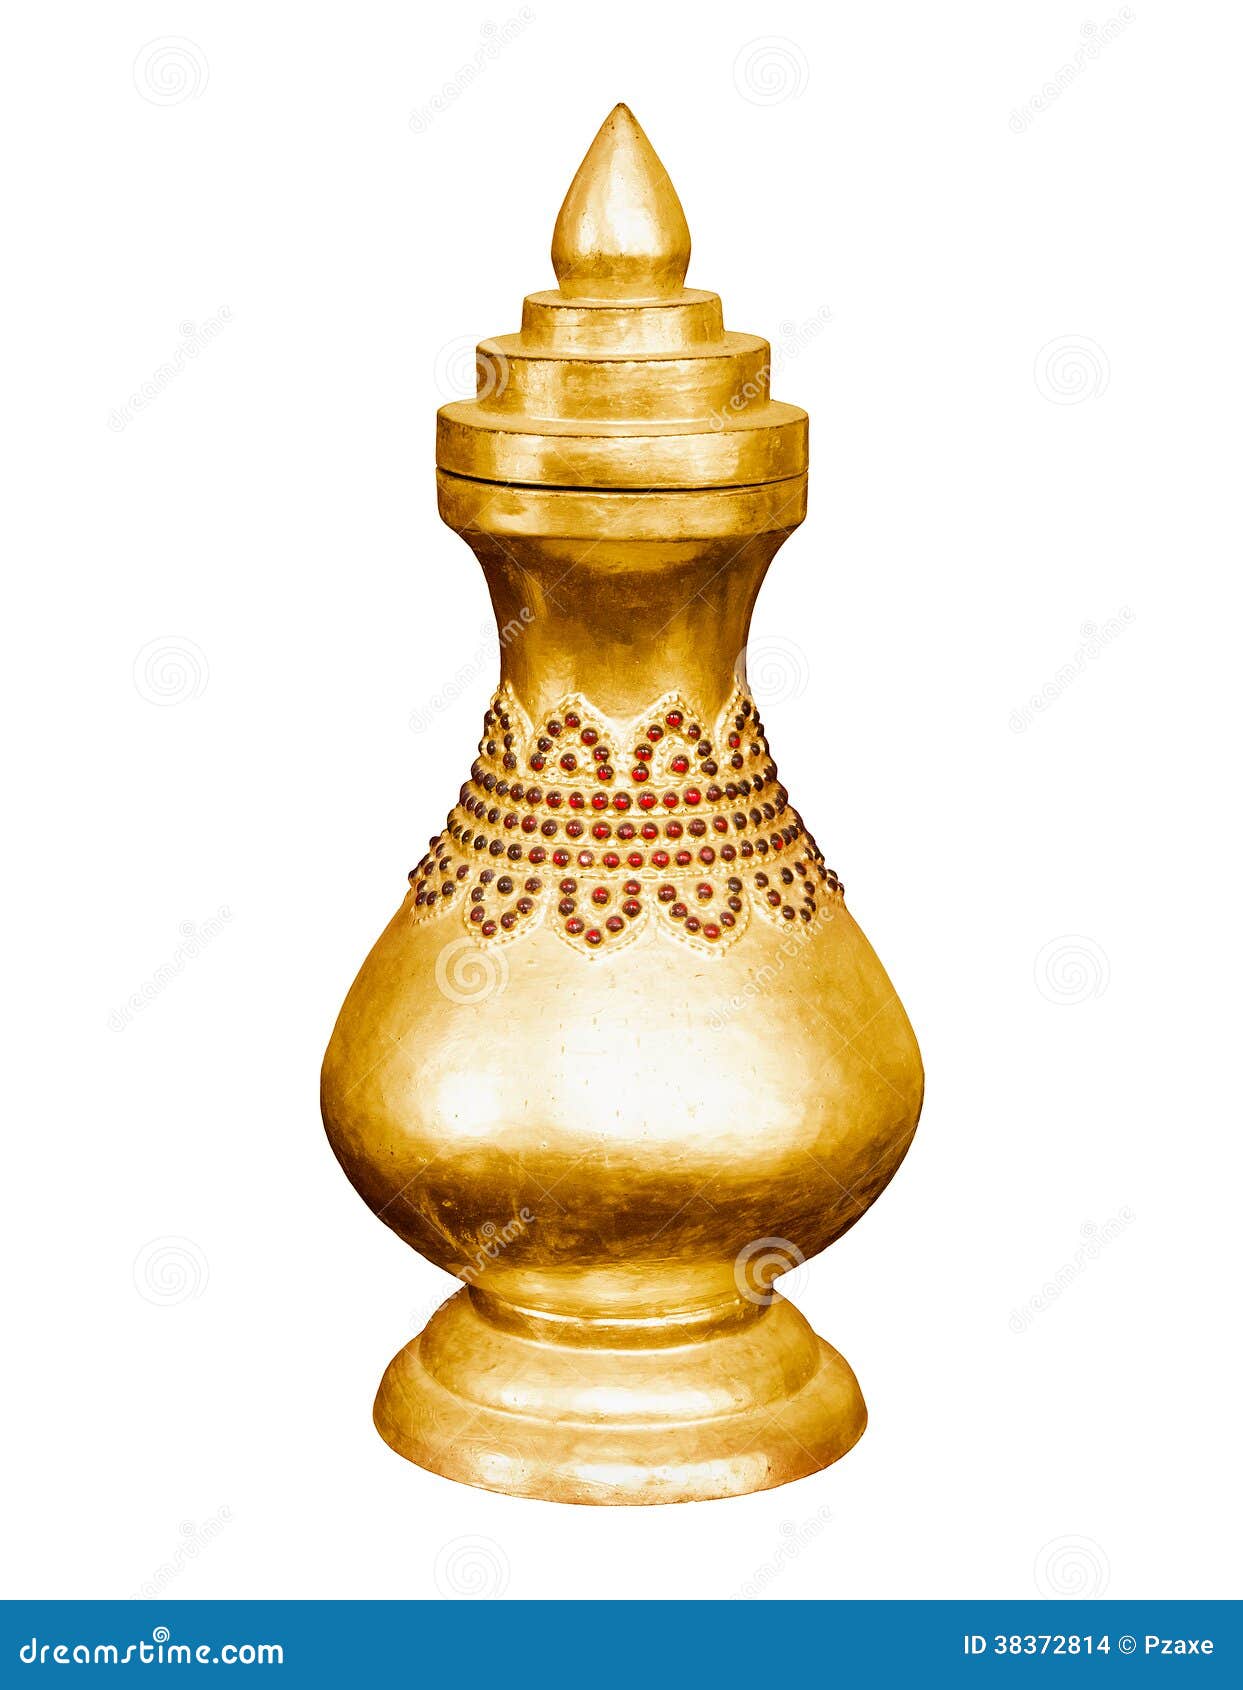 Vintage golden vessel. Myanmar, Mandalay. Vintage golden vessel isolated on white background. Myanmar, Mandalay